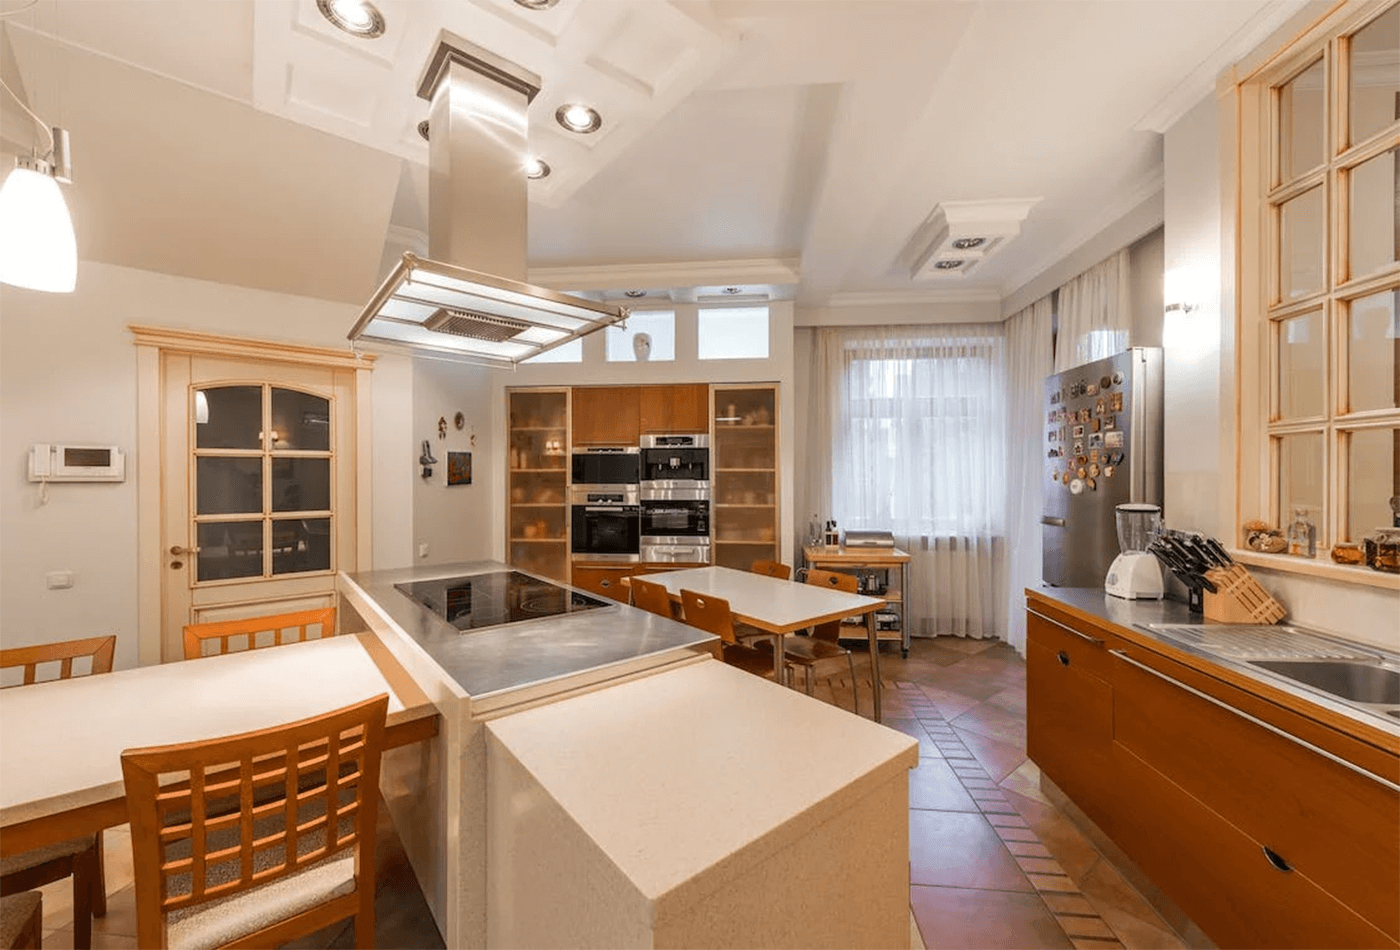 Sensational Kitchen Ideas - Stunning Designs & Layouts